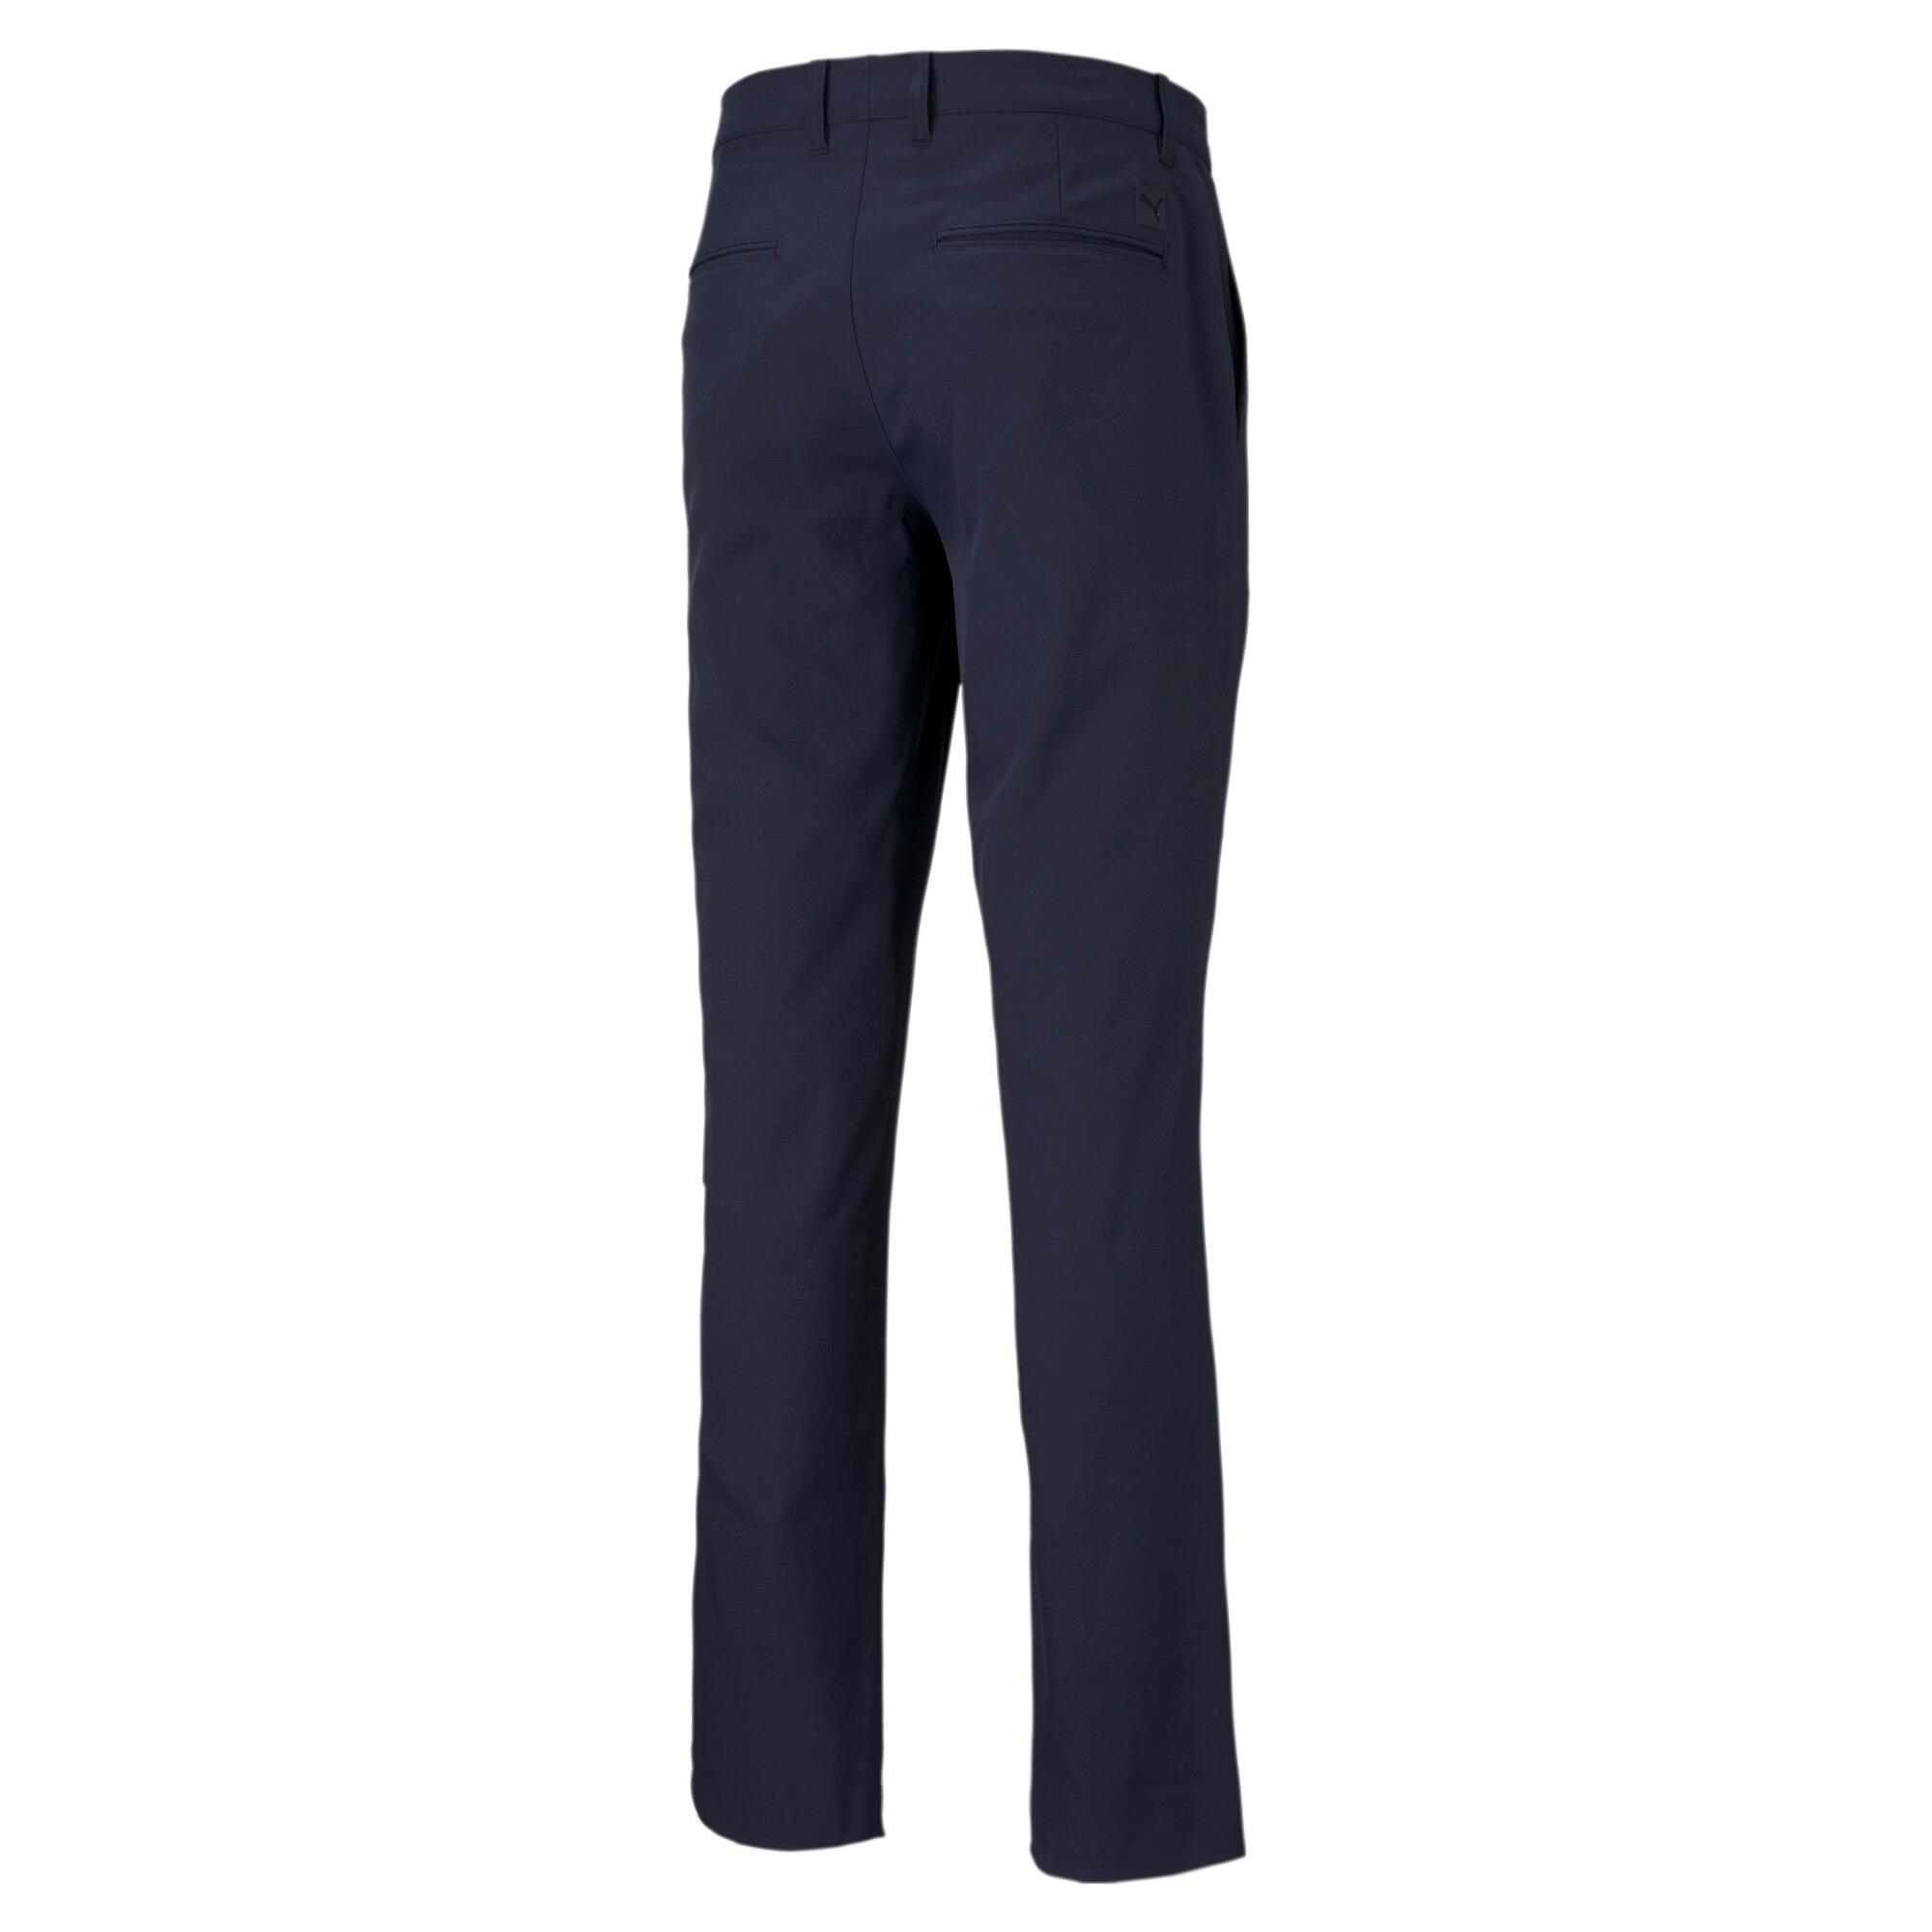 PUMA Mens Jackpot Tailored Golf Pants Trousers - Navy Blazer 4/4